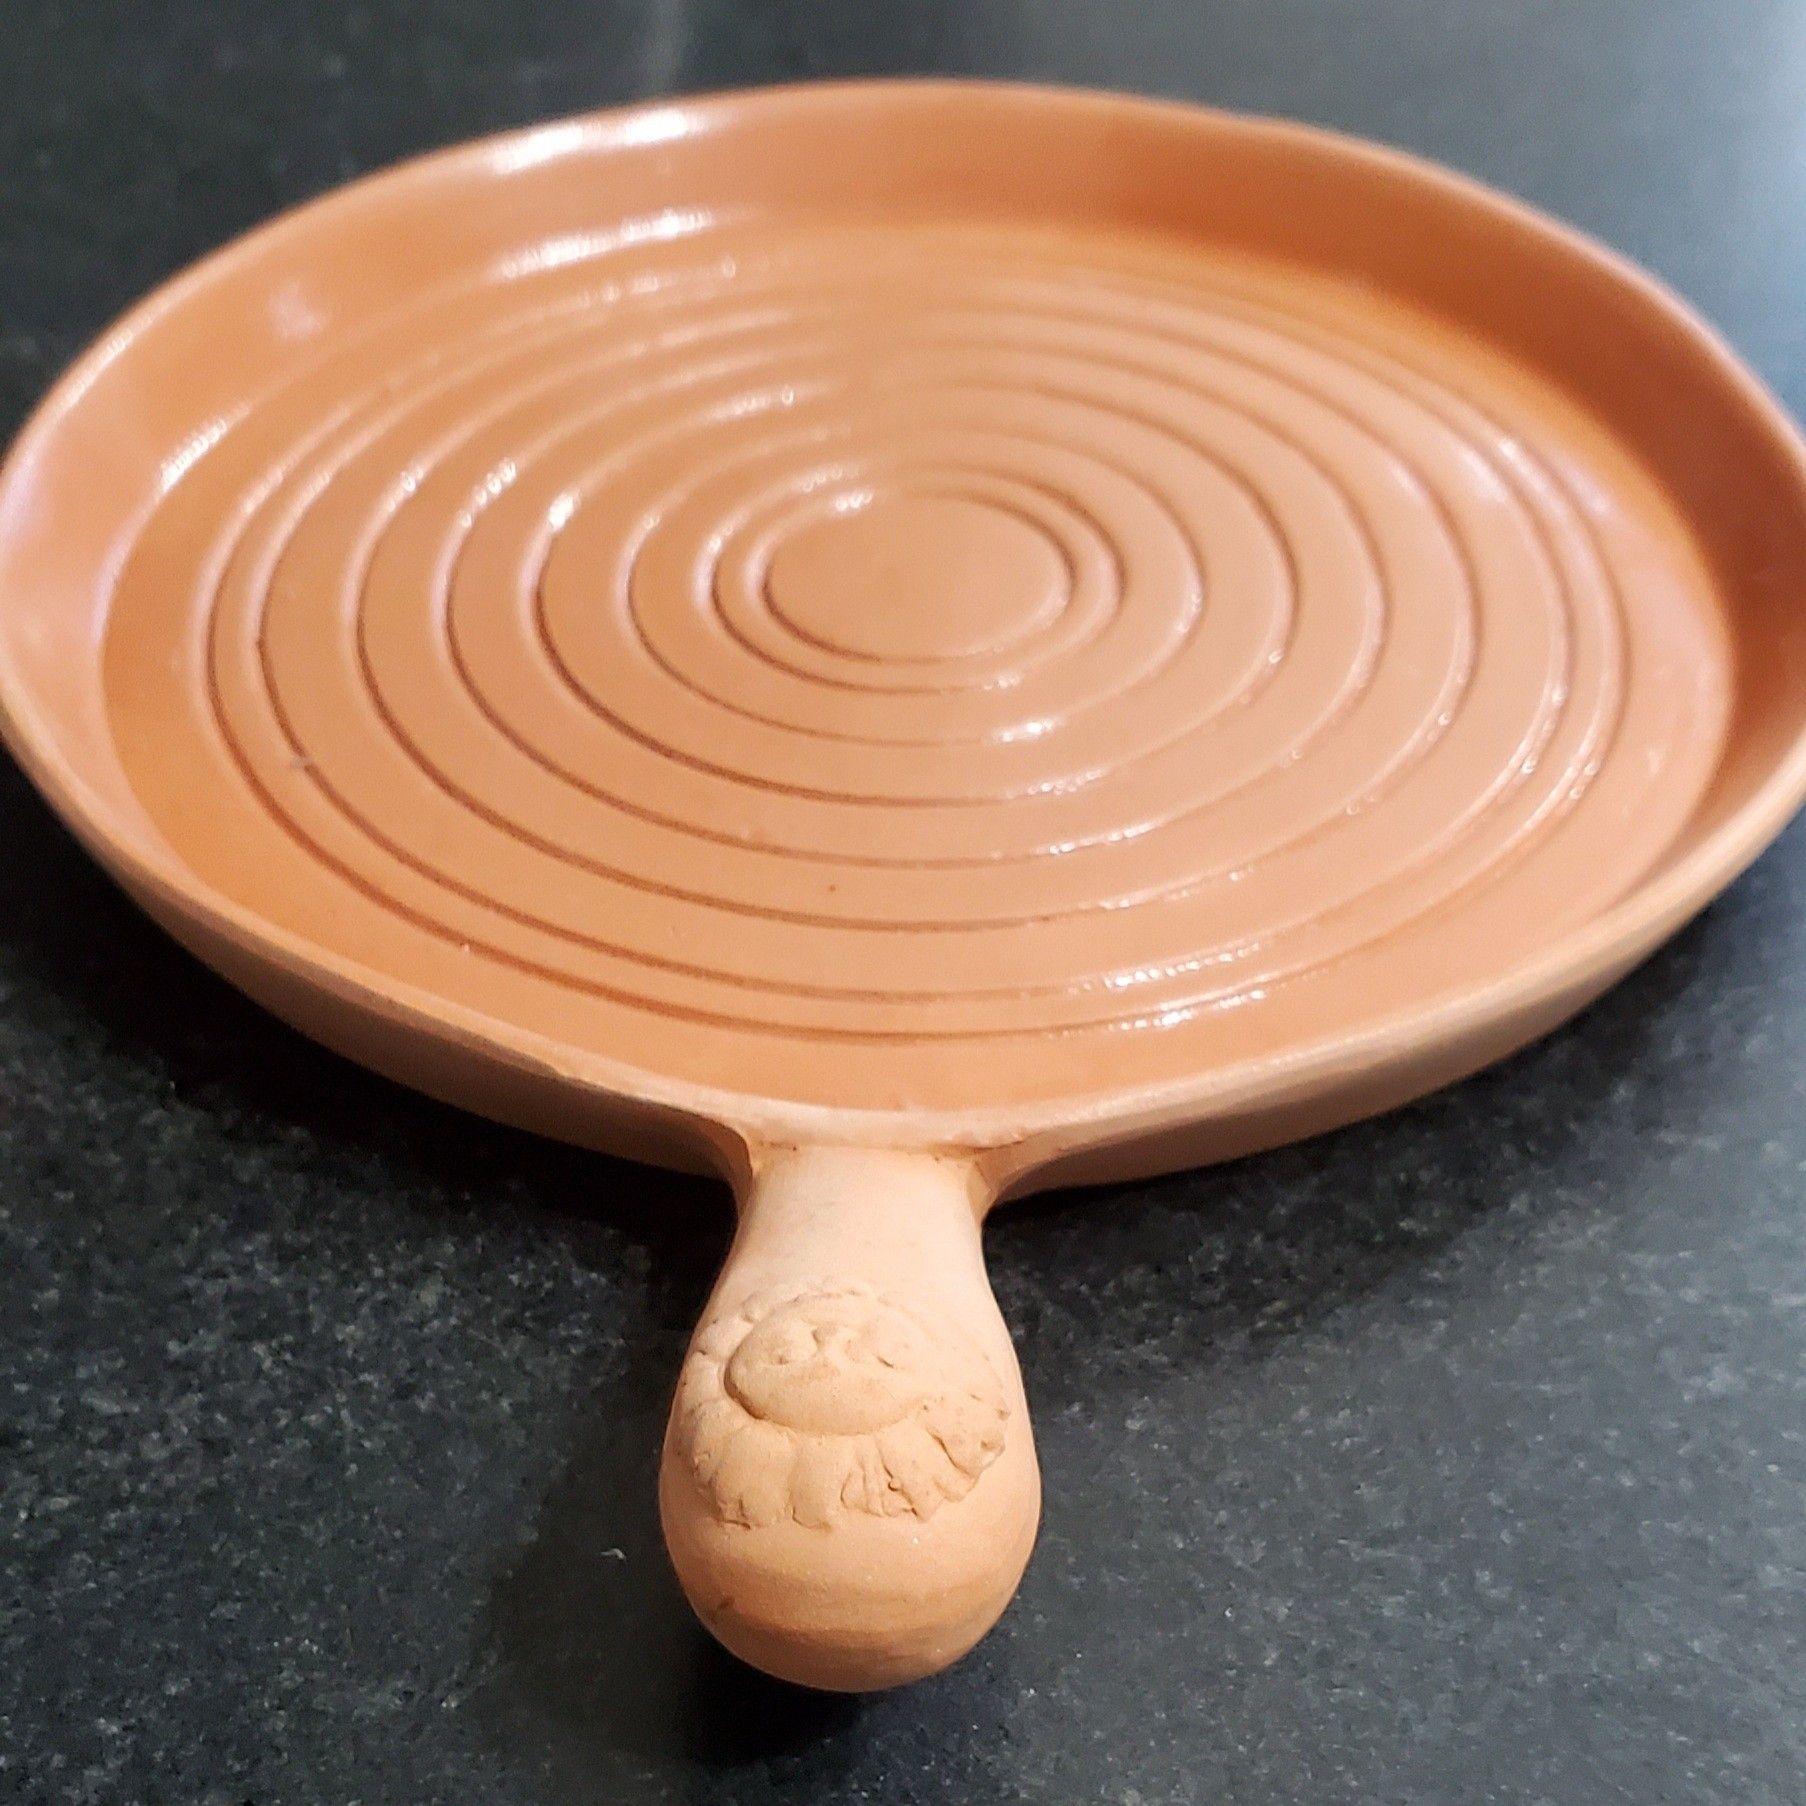 Terracotta warming plate